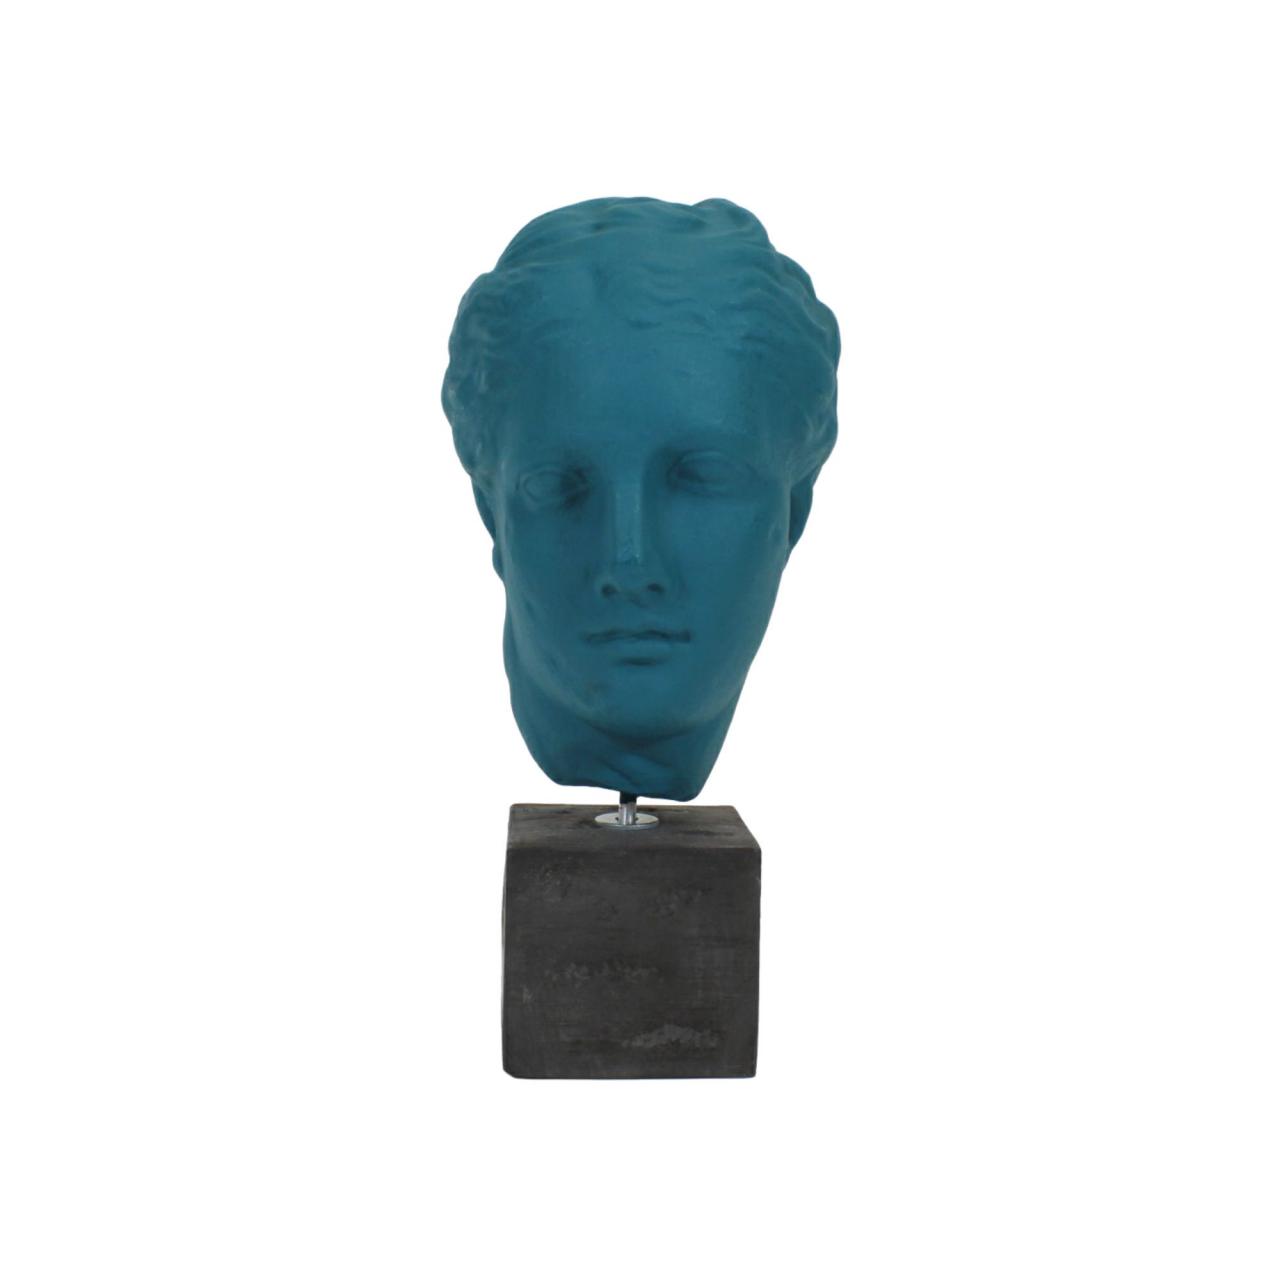 Hygieia Goddess Bust Statue Replica Sculpture 26cm Petrol Color